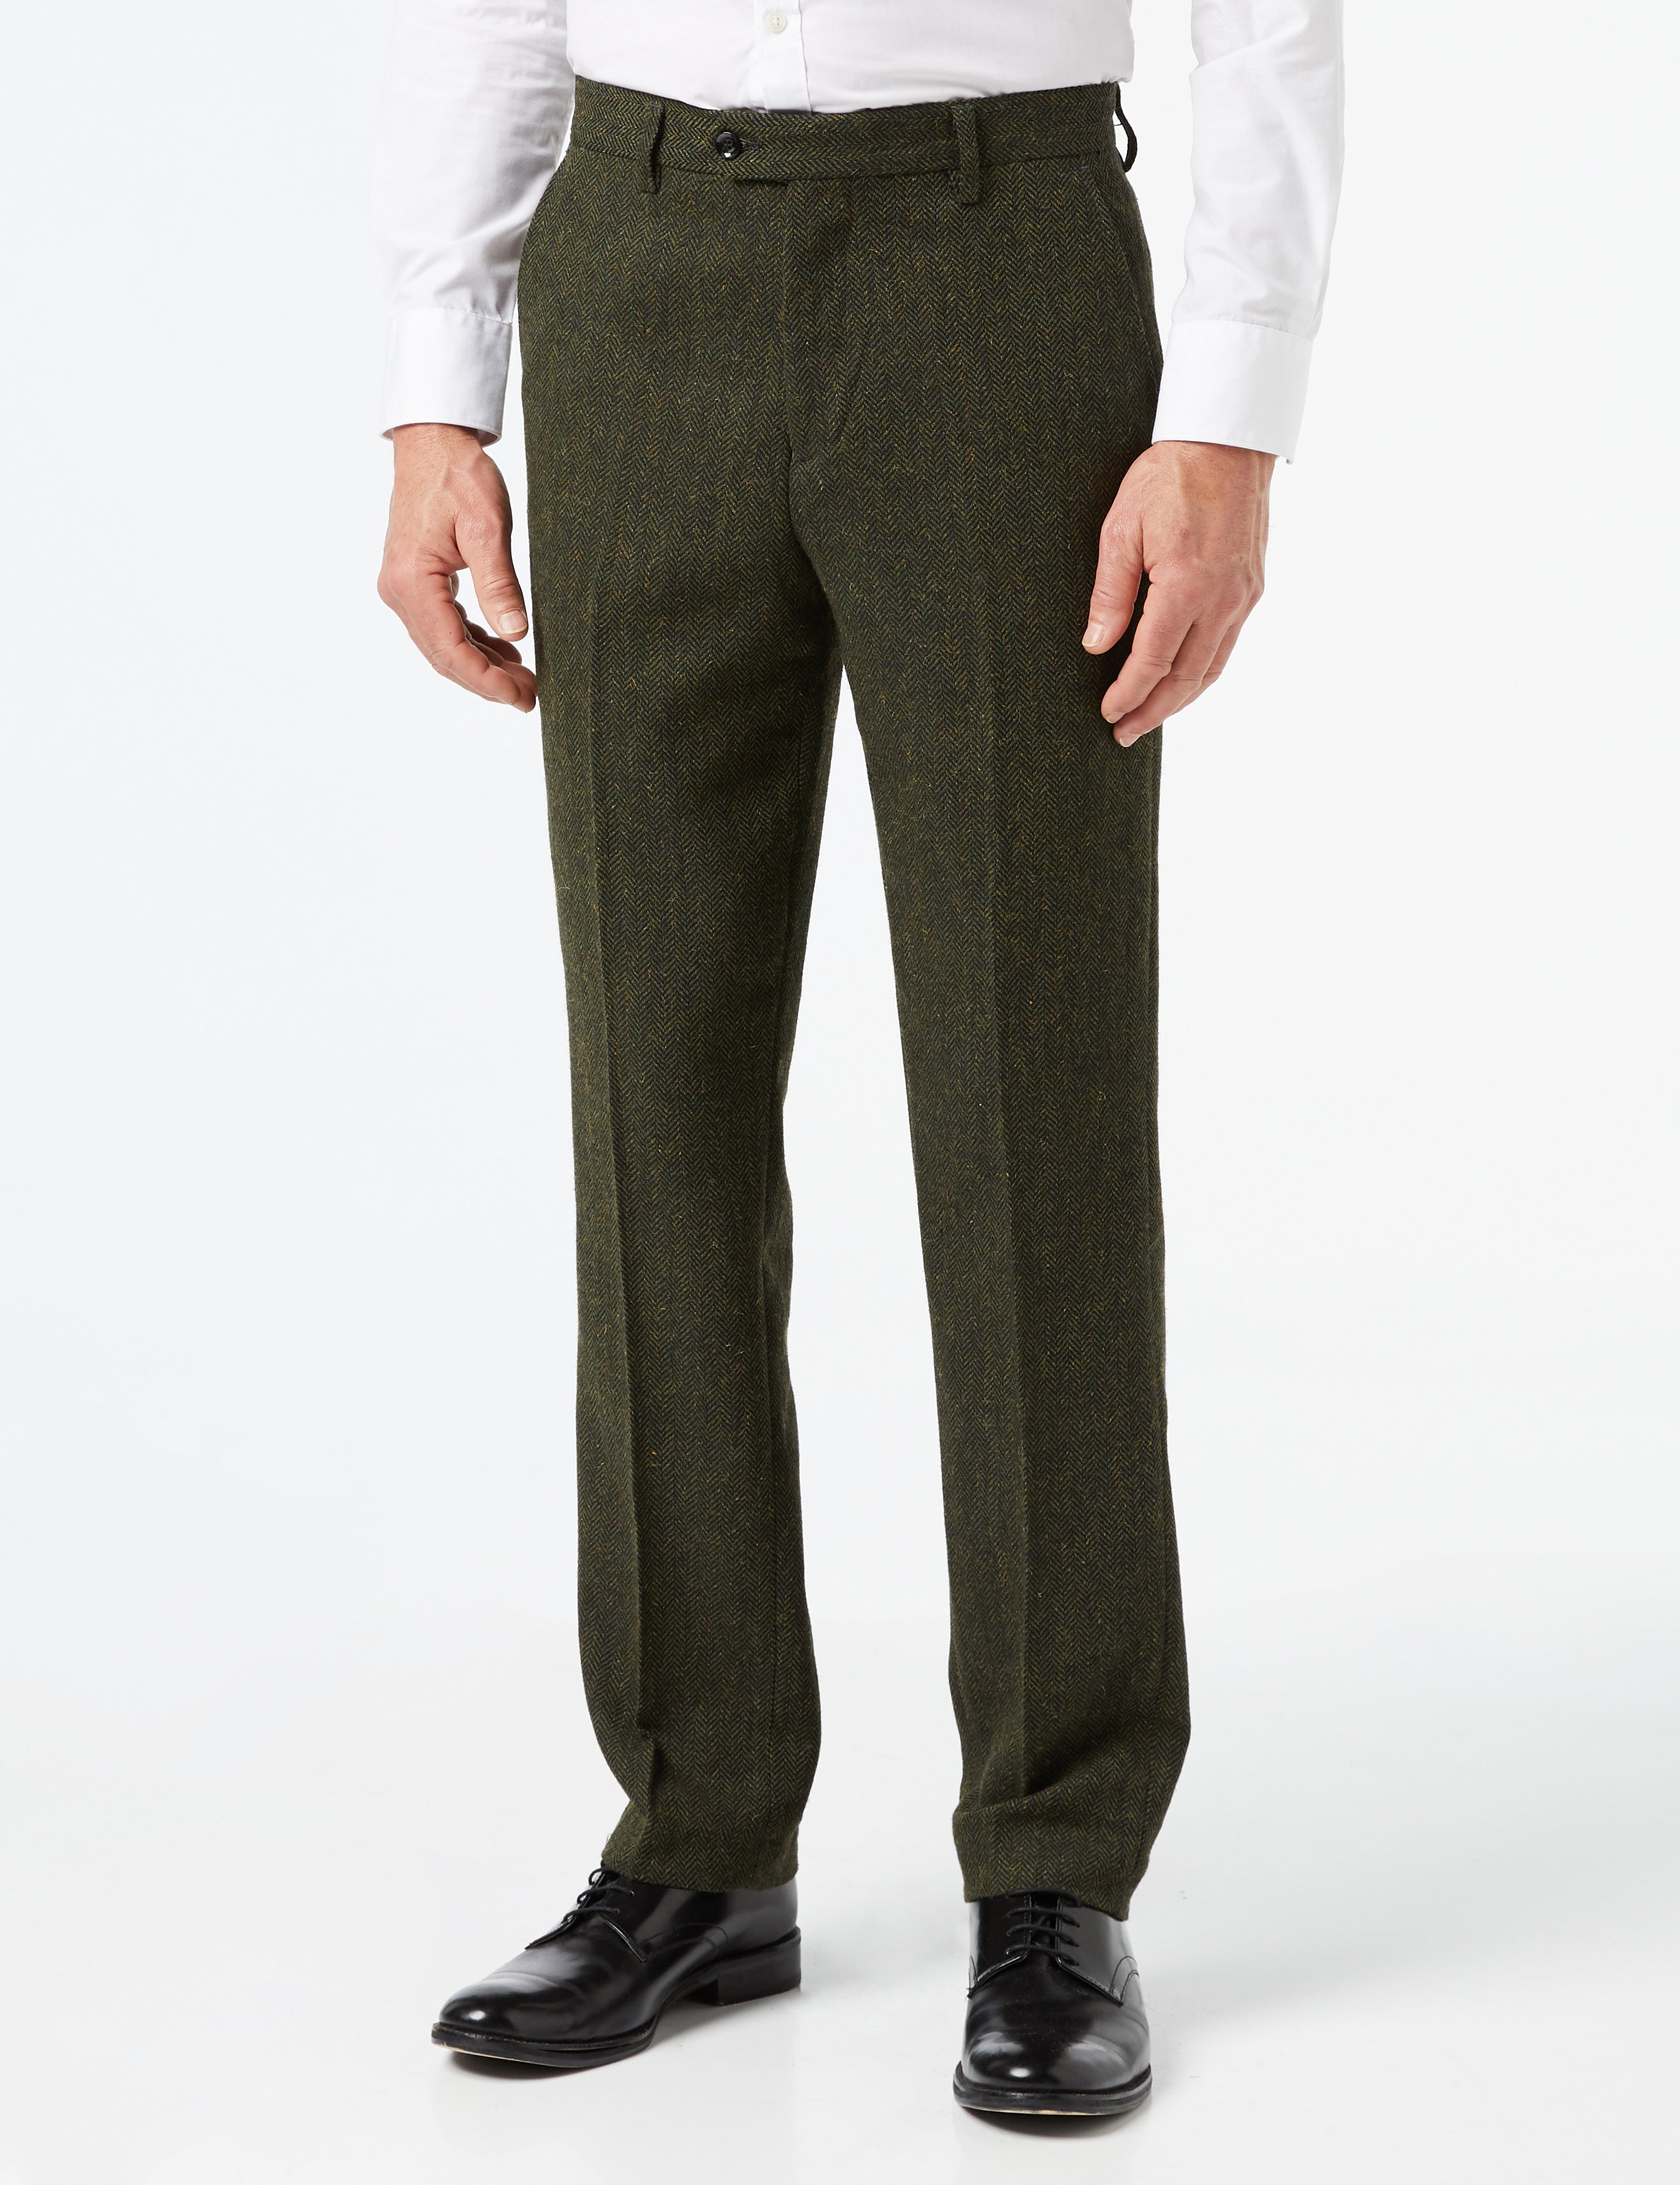 Edward - Mens Olive Green Herringbone 1920s Tailored Fit Suit Pants